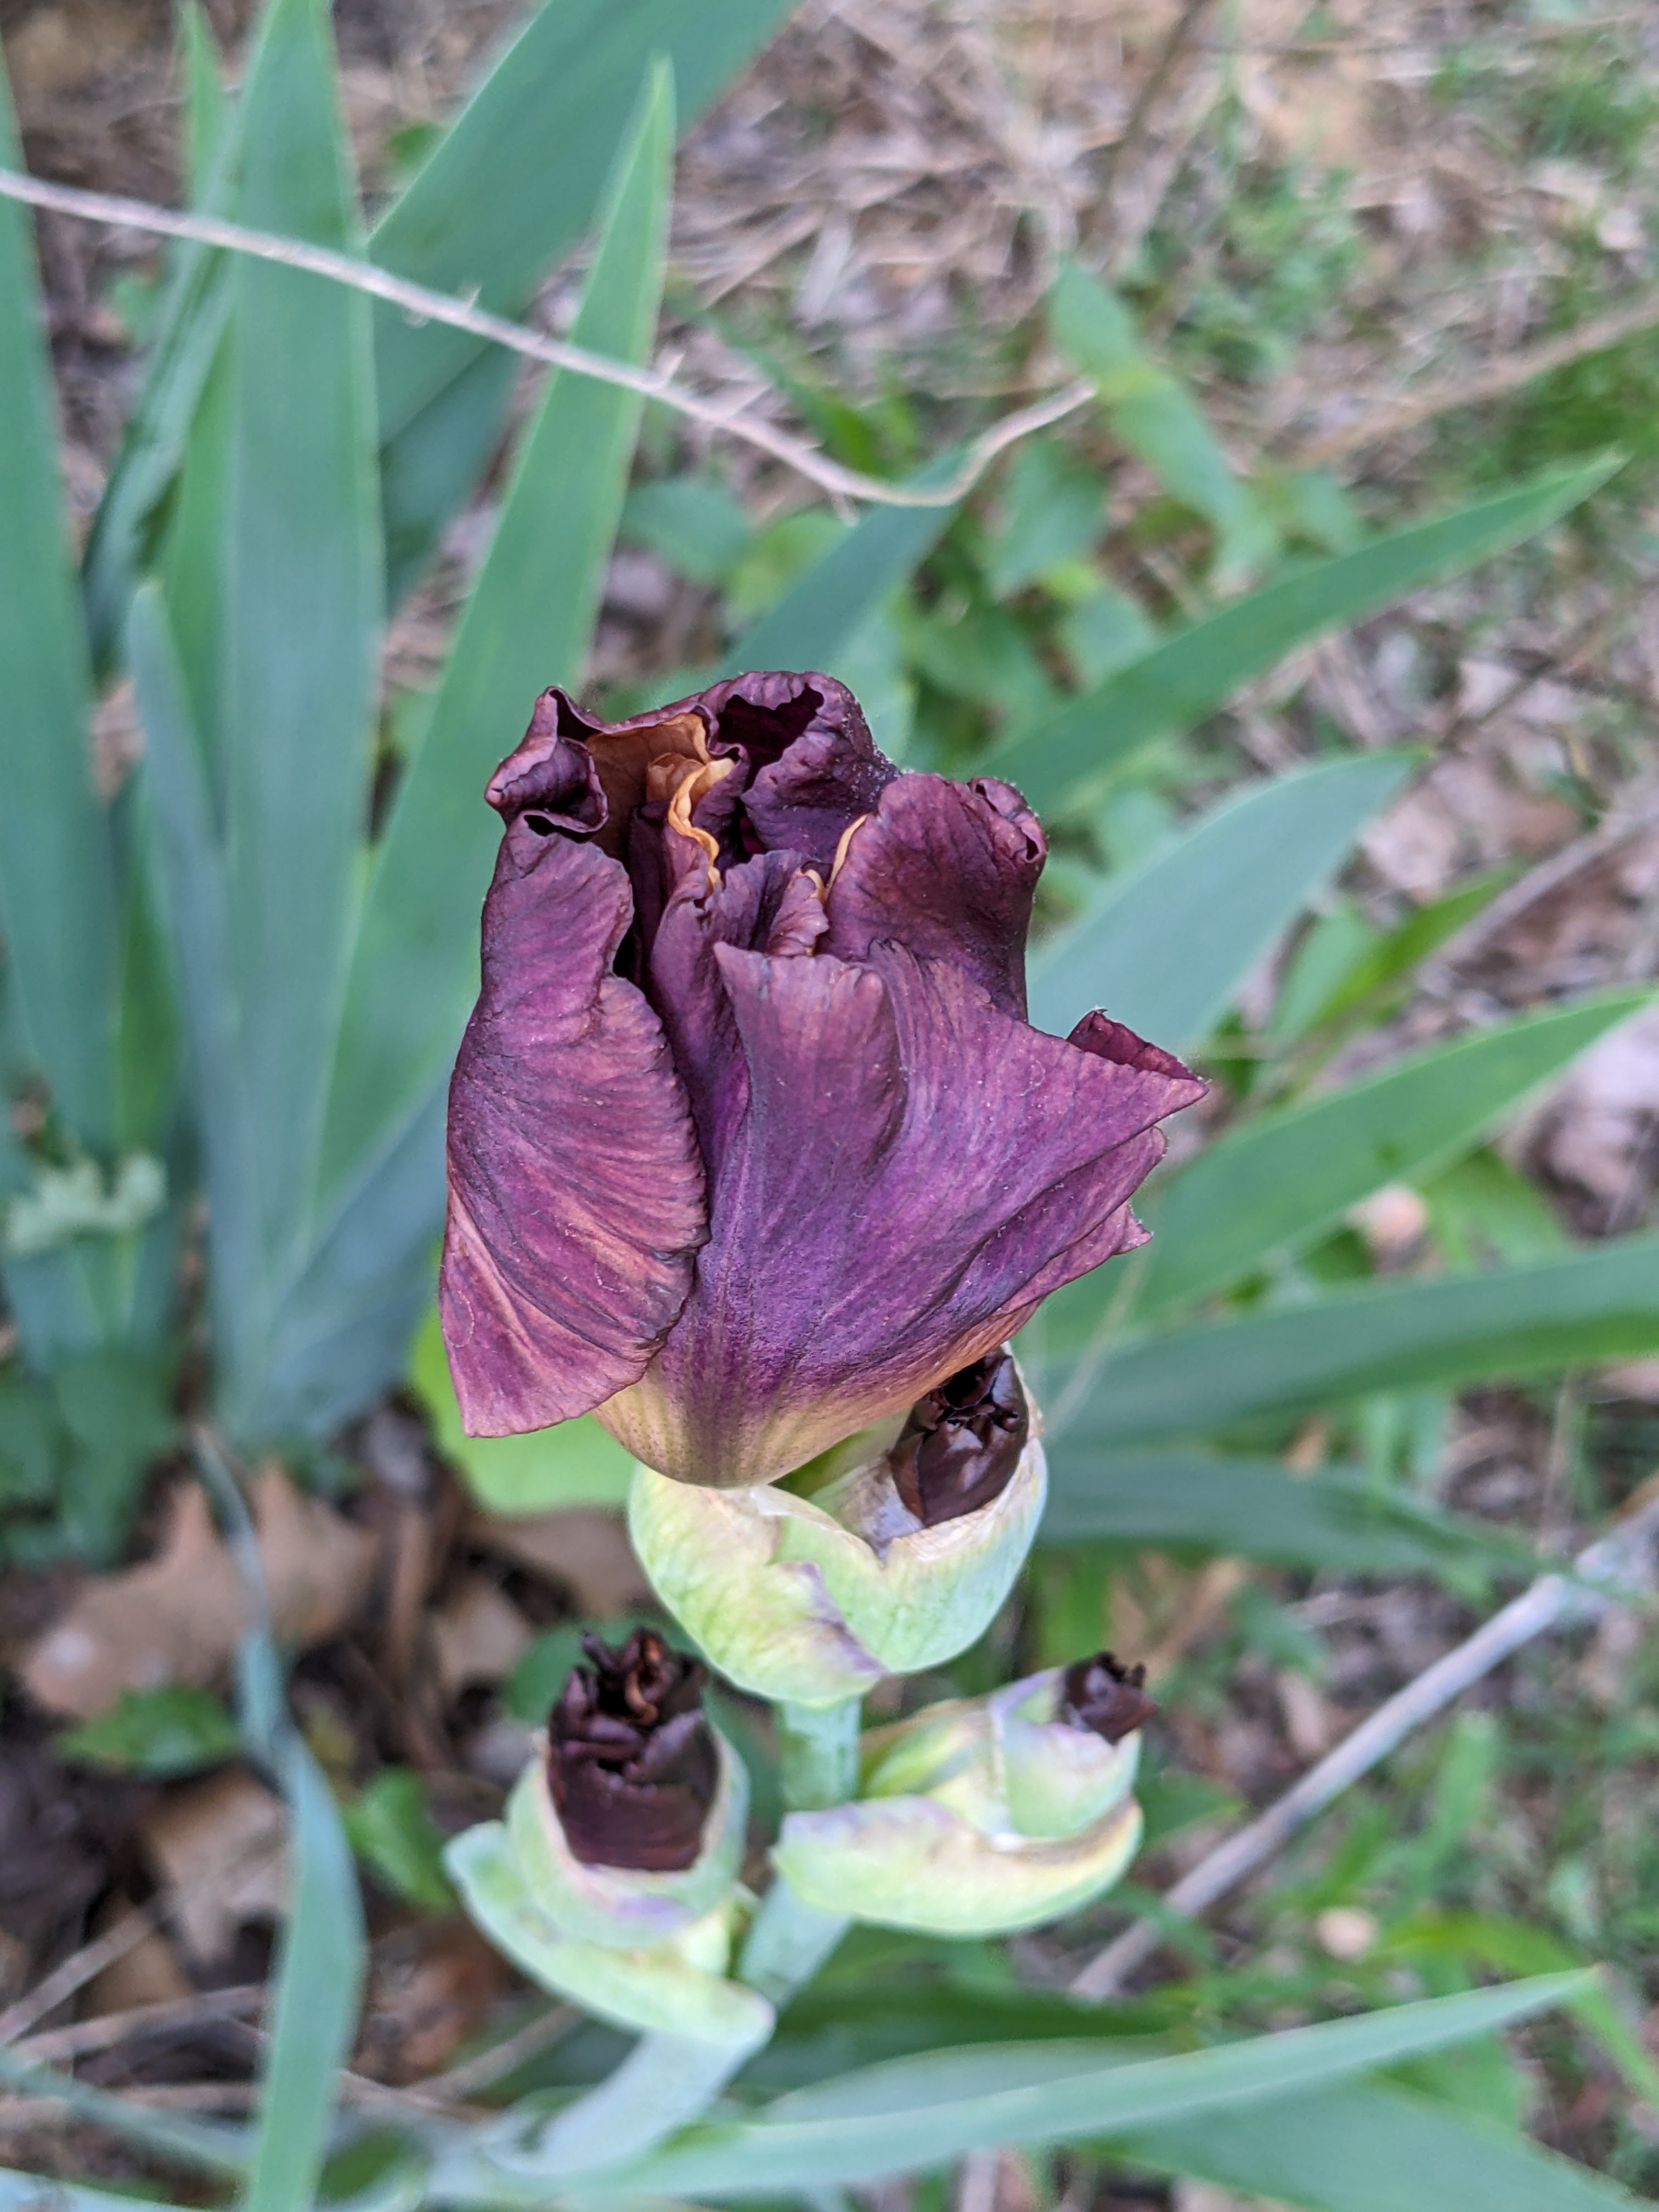 Iris plants by the porch corner.